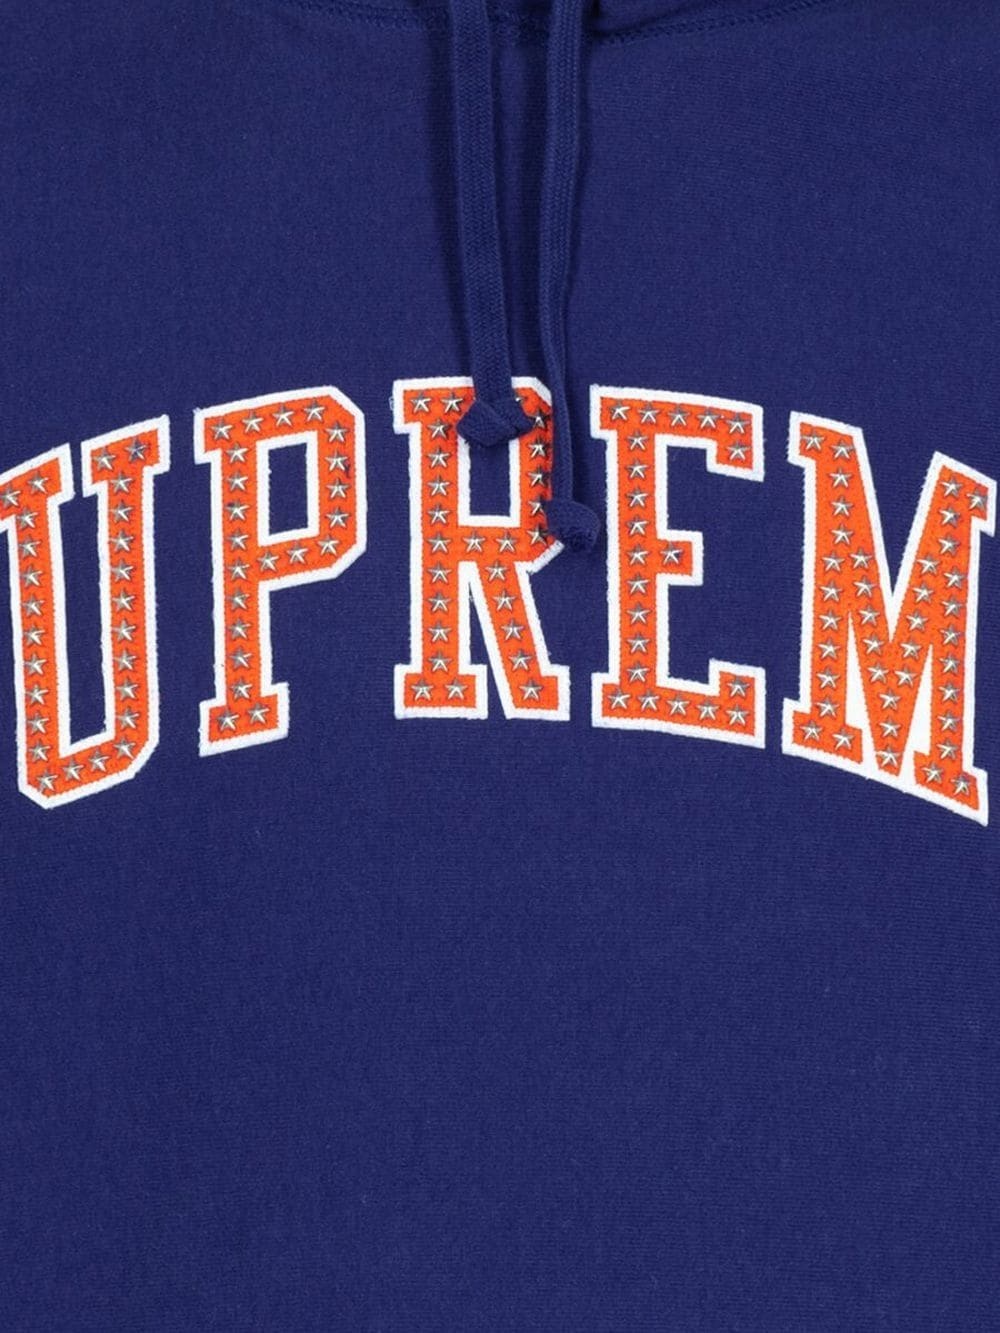 Supreme Cord Collegiate Logo Hooded Sweatshirt Navy